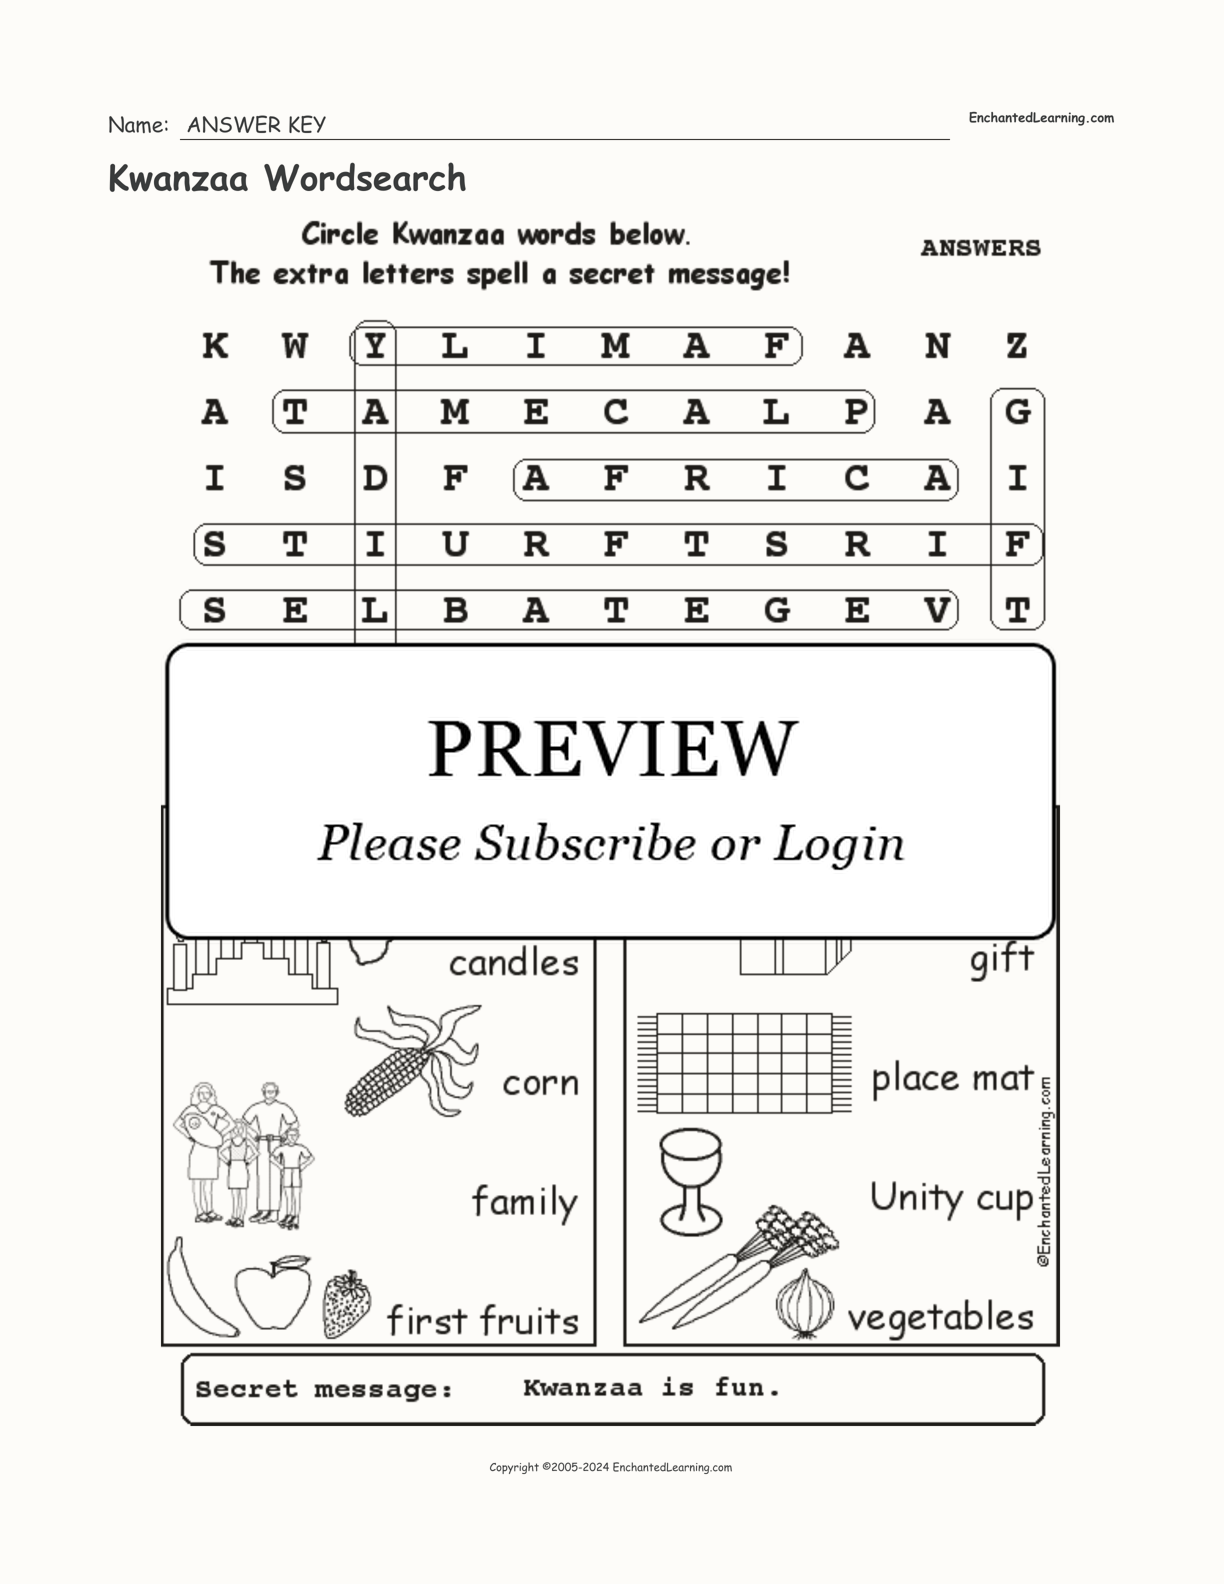 Kwanzaa Wordsearch interactive worksheet page 2